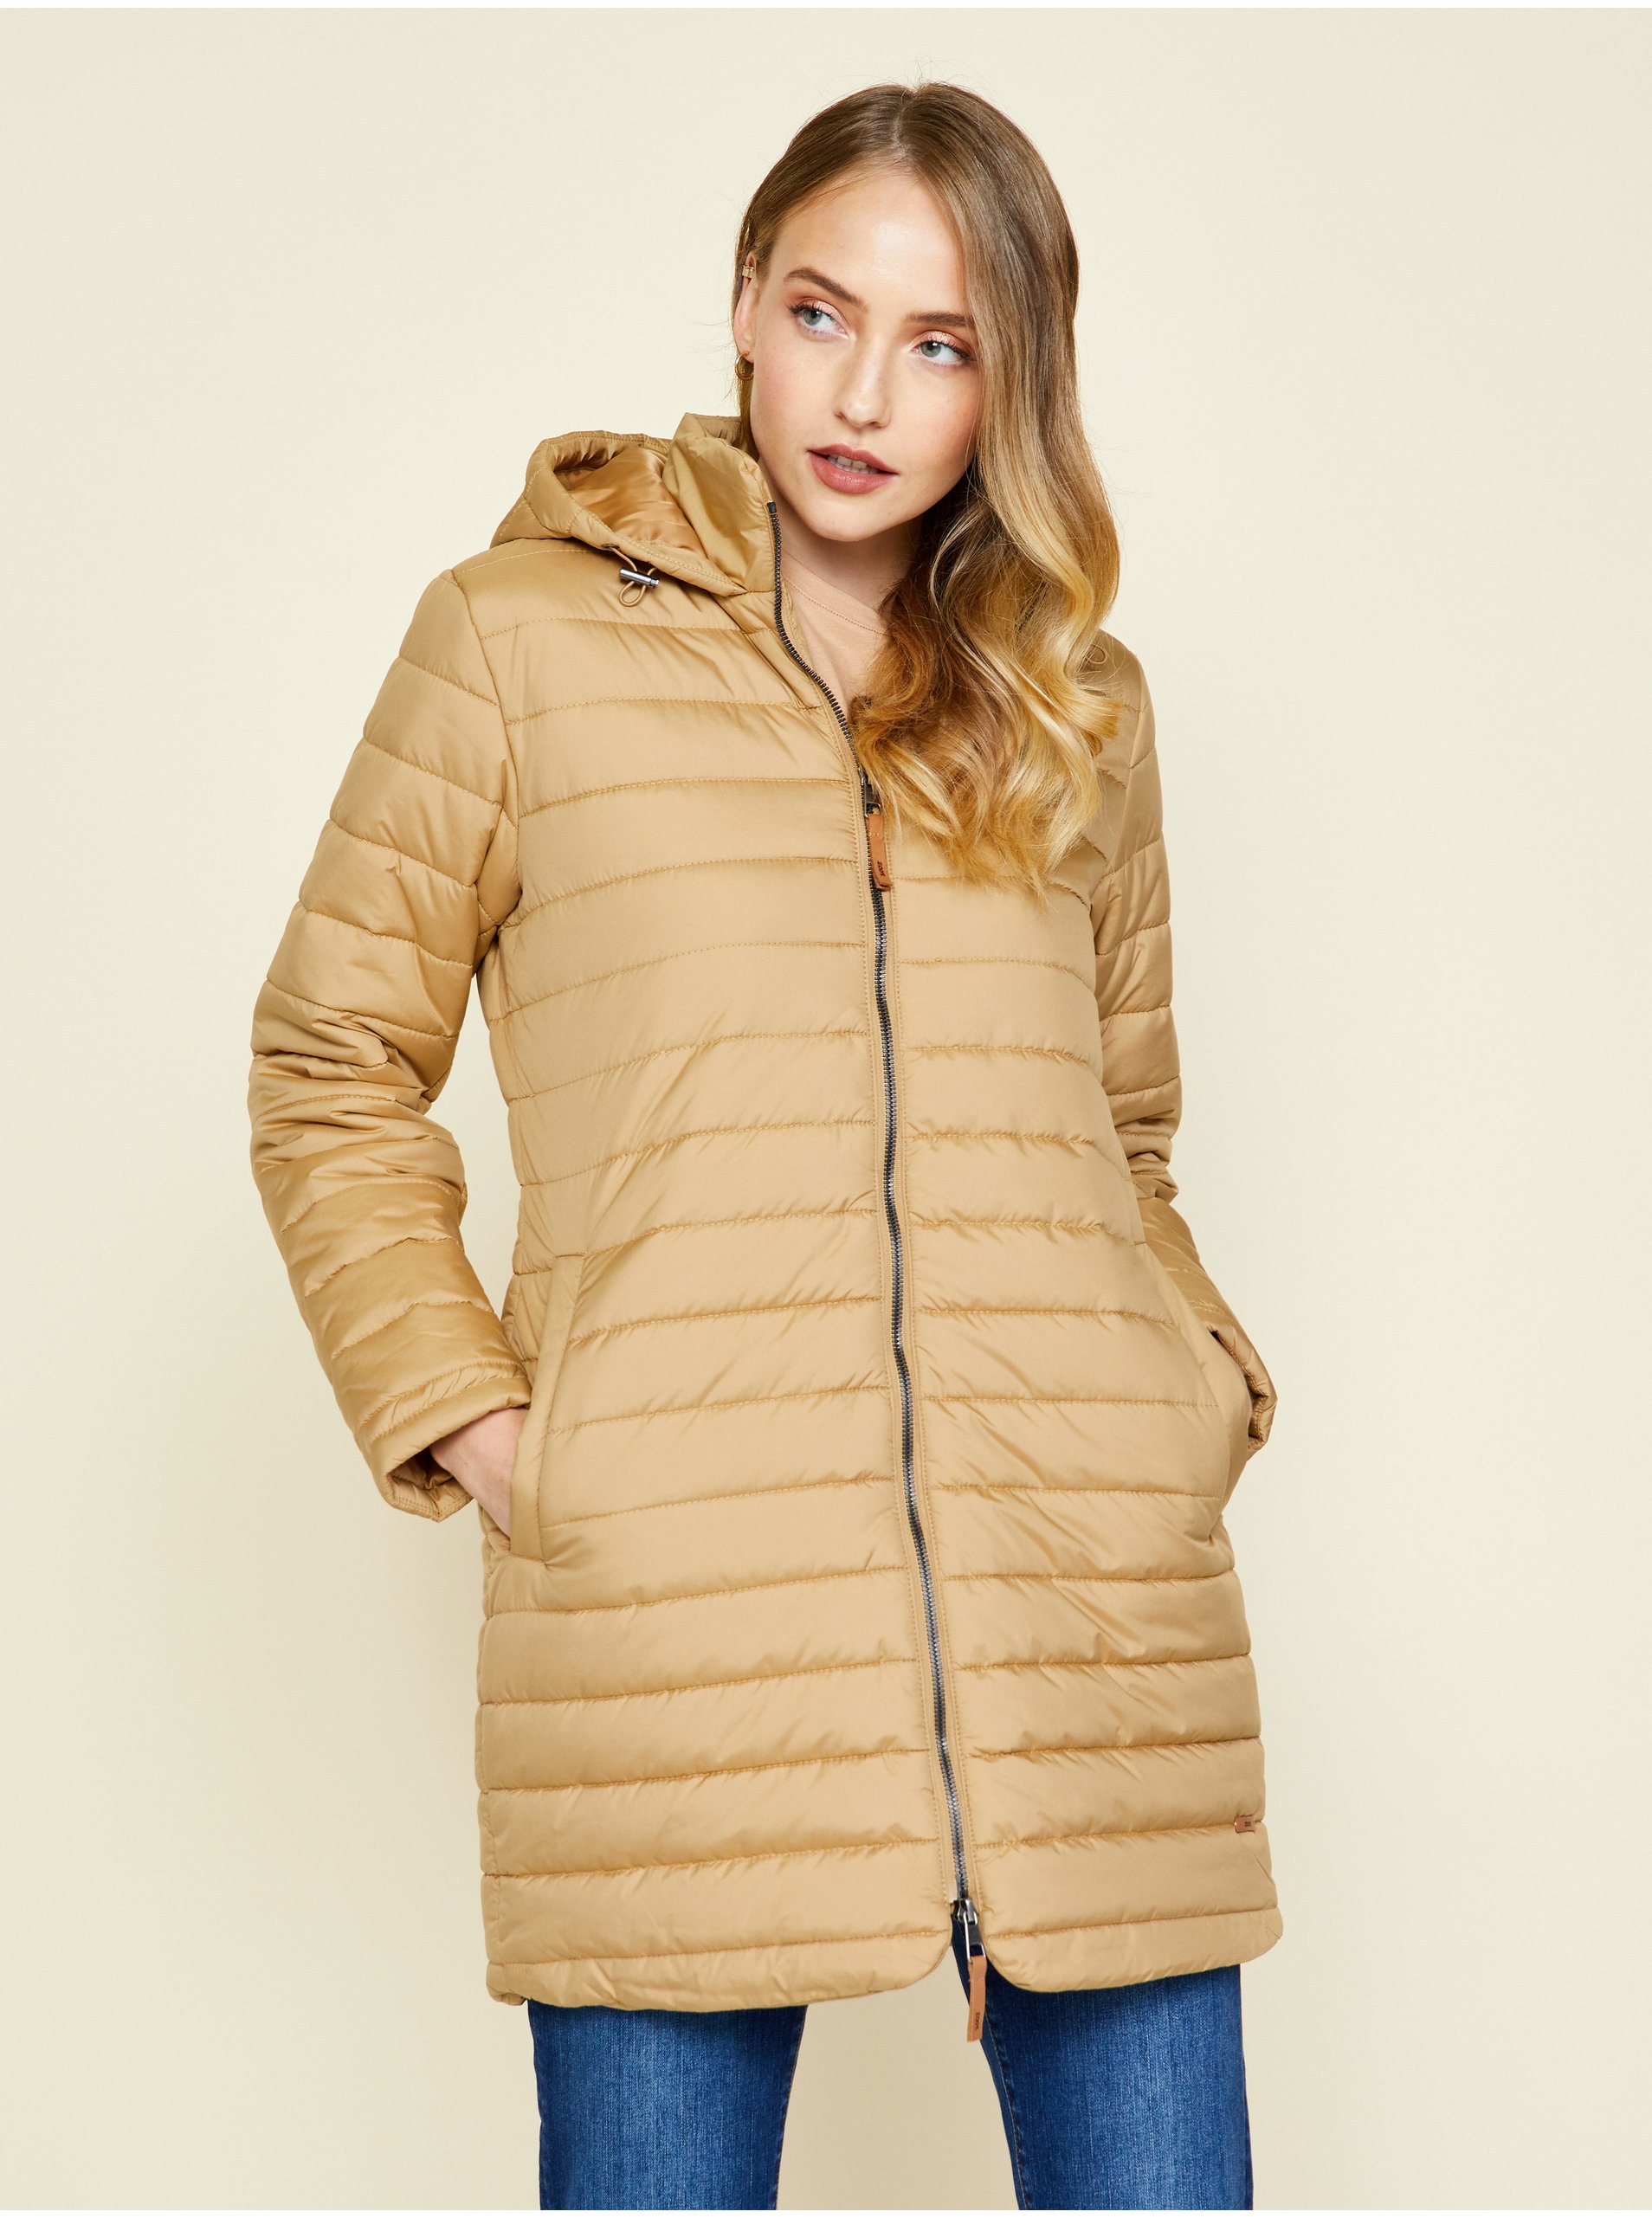 Lacno Zlatá dámska prešívaná predĺžená zimná bunda s kapucňou ZOOT.lab Molly